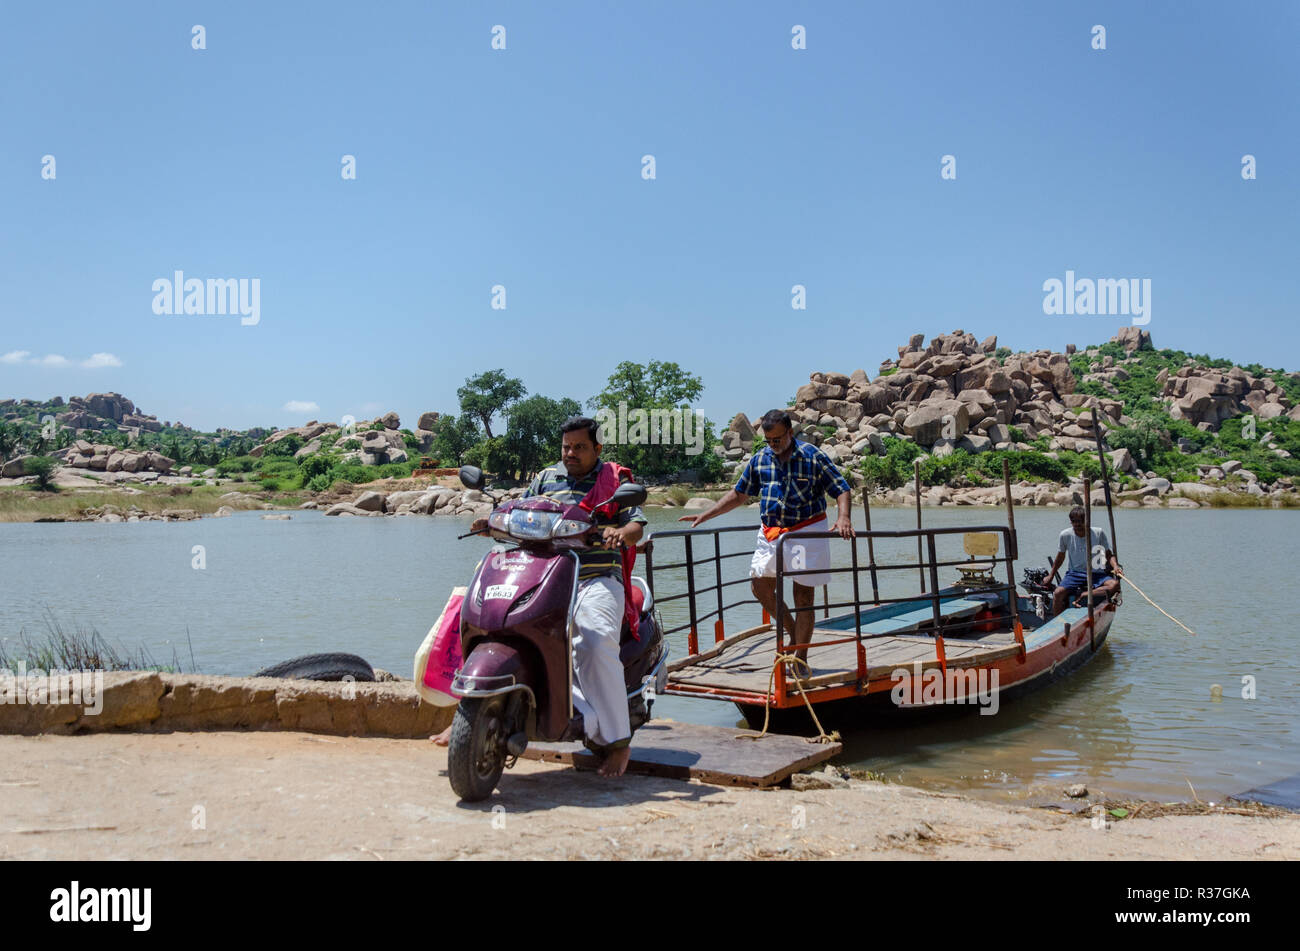 El servicio de ferry a través del río Tungabhadra llegando Talvar Gatta, Anegundi, Karnataka, India Foto de stock